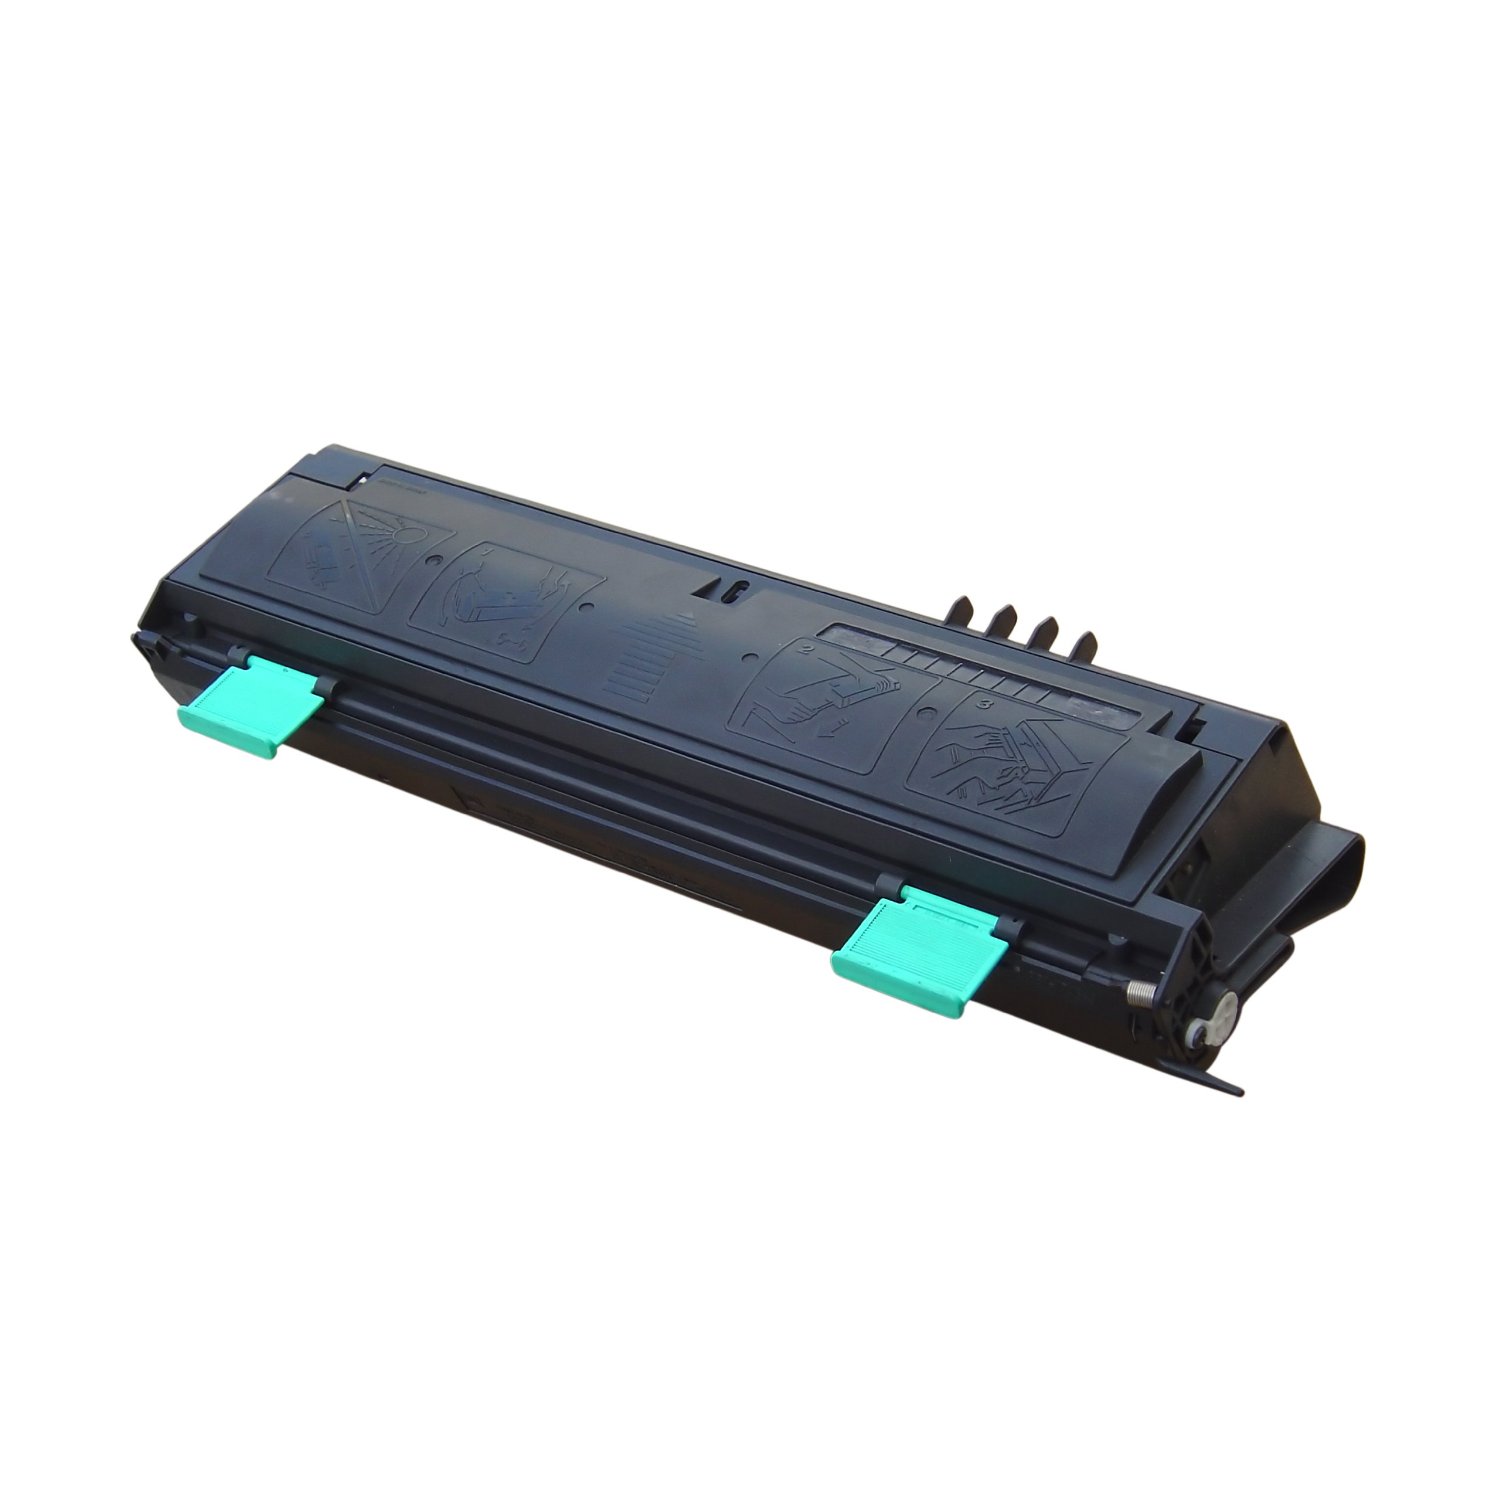 HP C3900A: HP C3900A Compatible Remanufactured Black Toner Cartridge